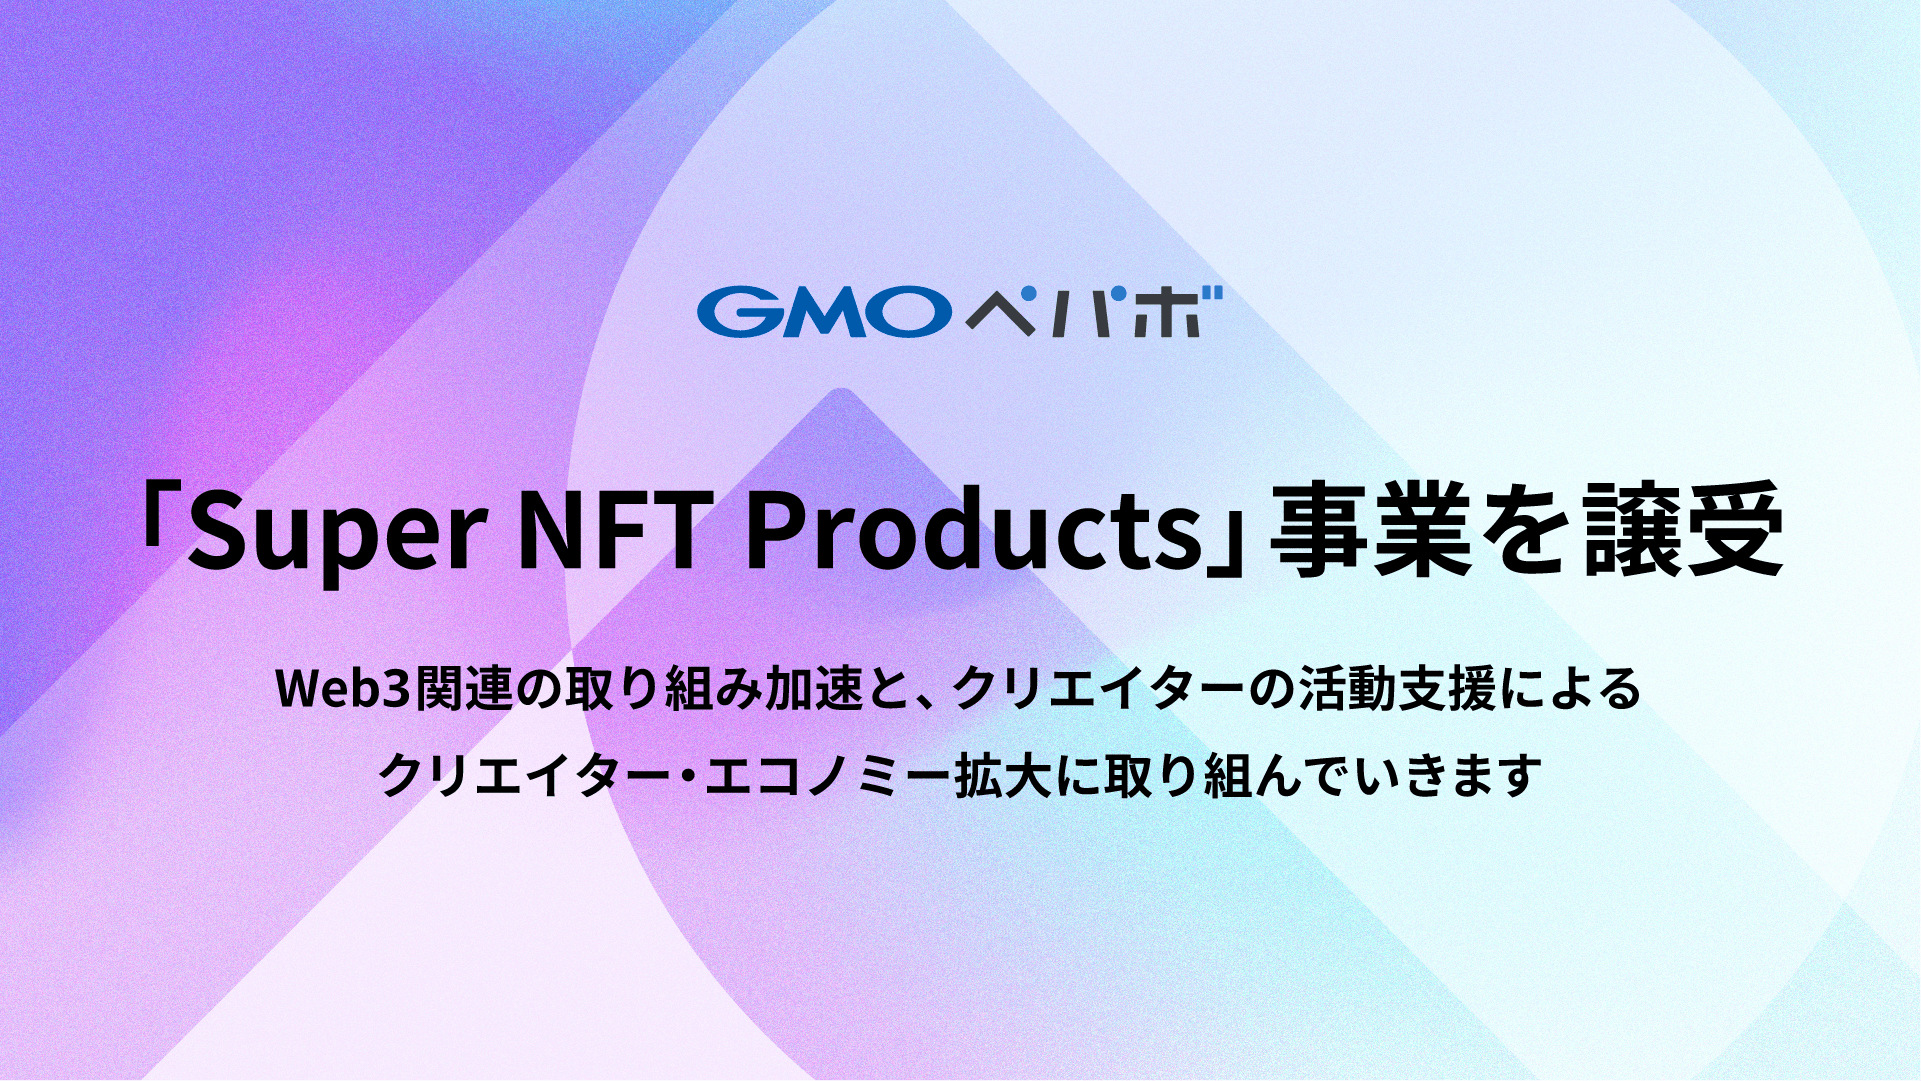 「Super NFT Products」事業を譲受 Web3関連の取り組み加速と、クリエイターの活動支援によるクリエイター・エコノミー拡大に取り組んでいきます